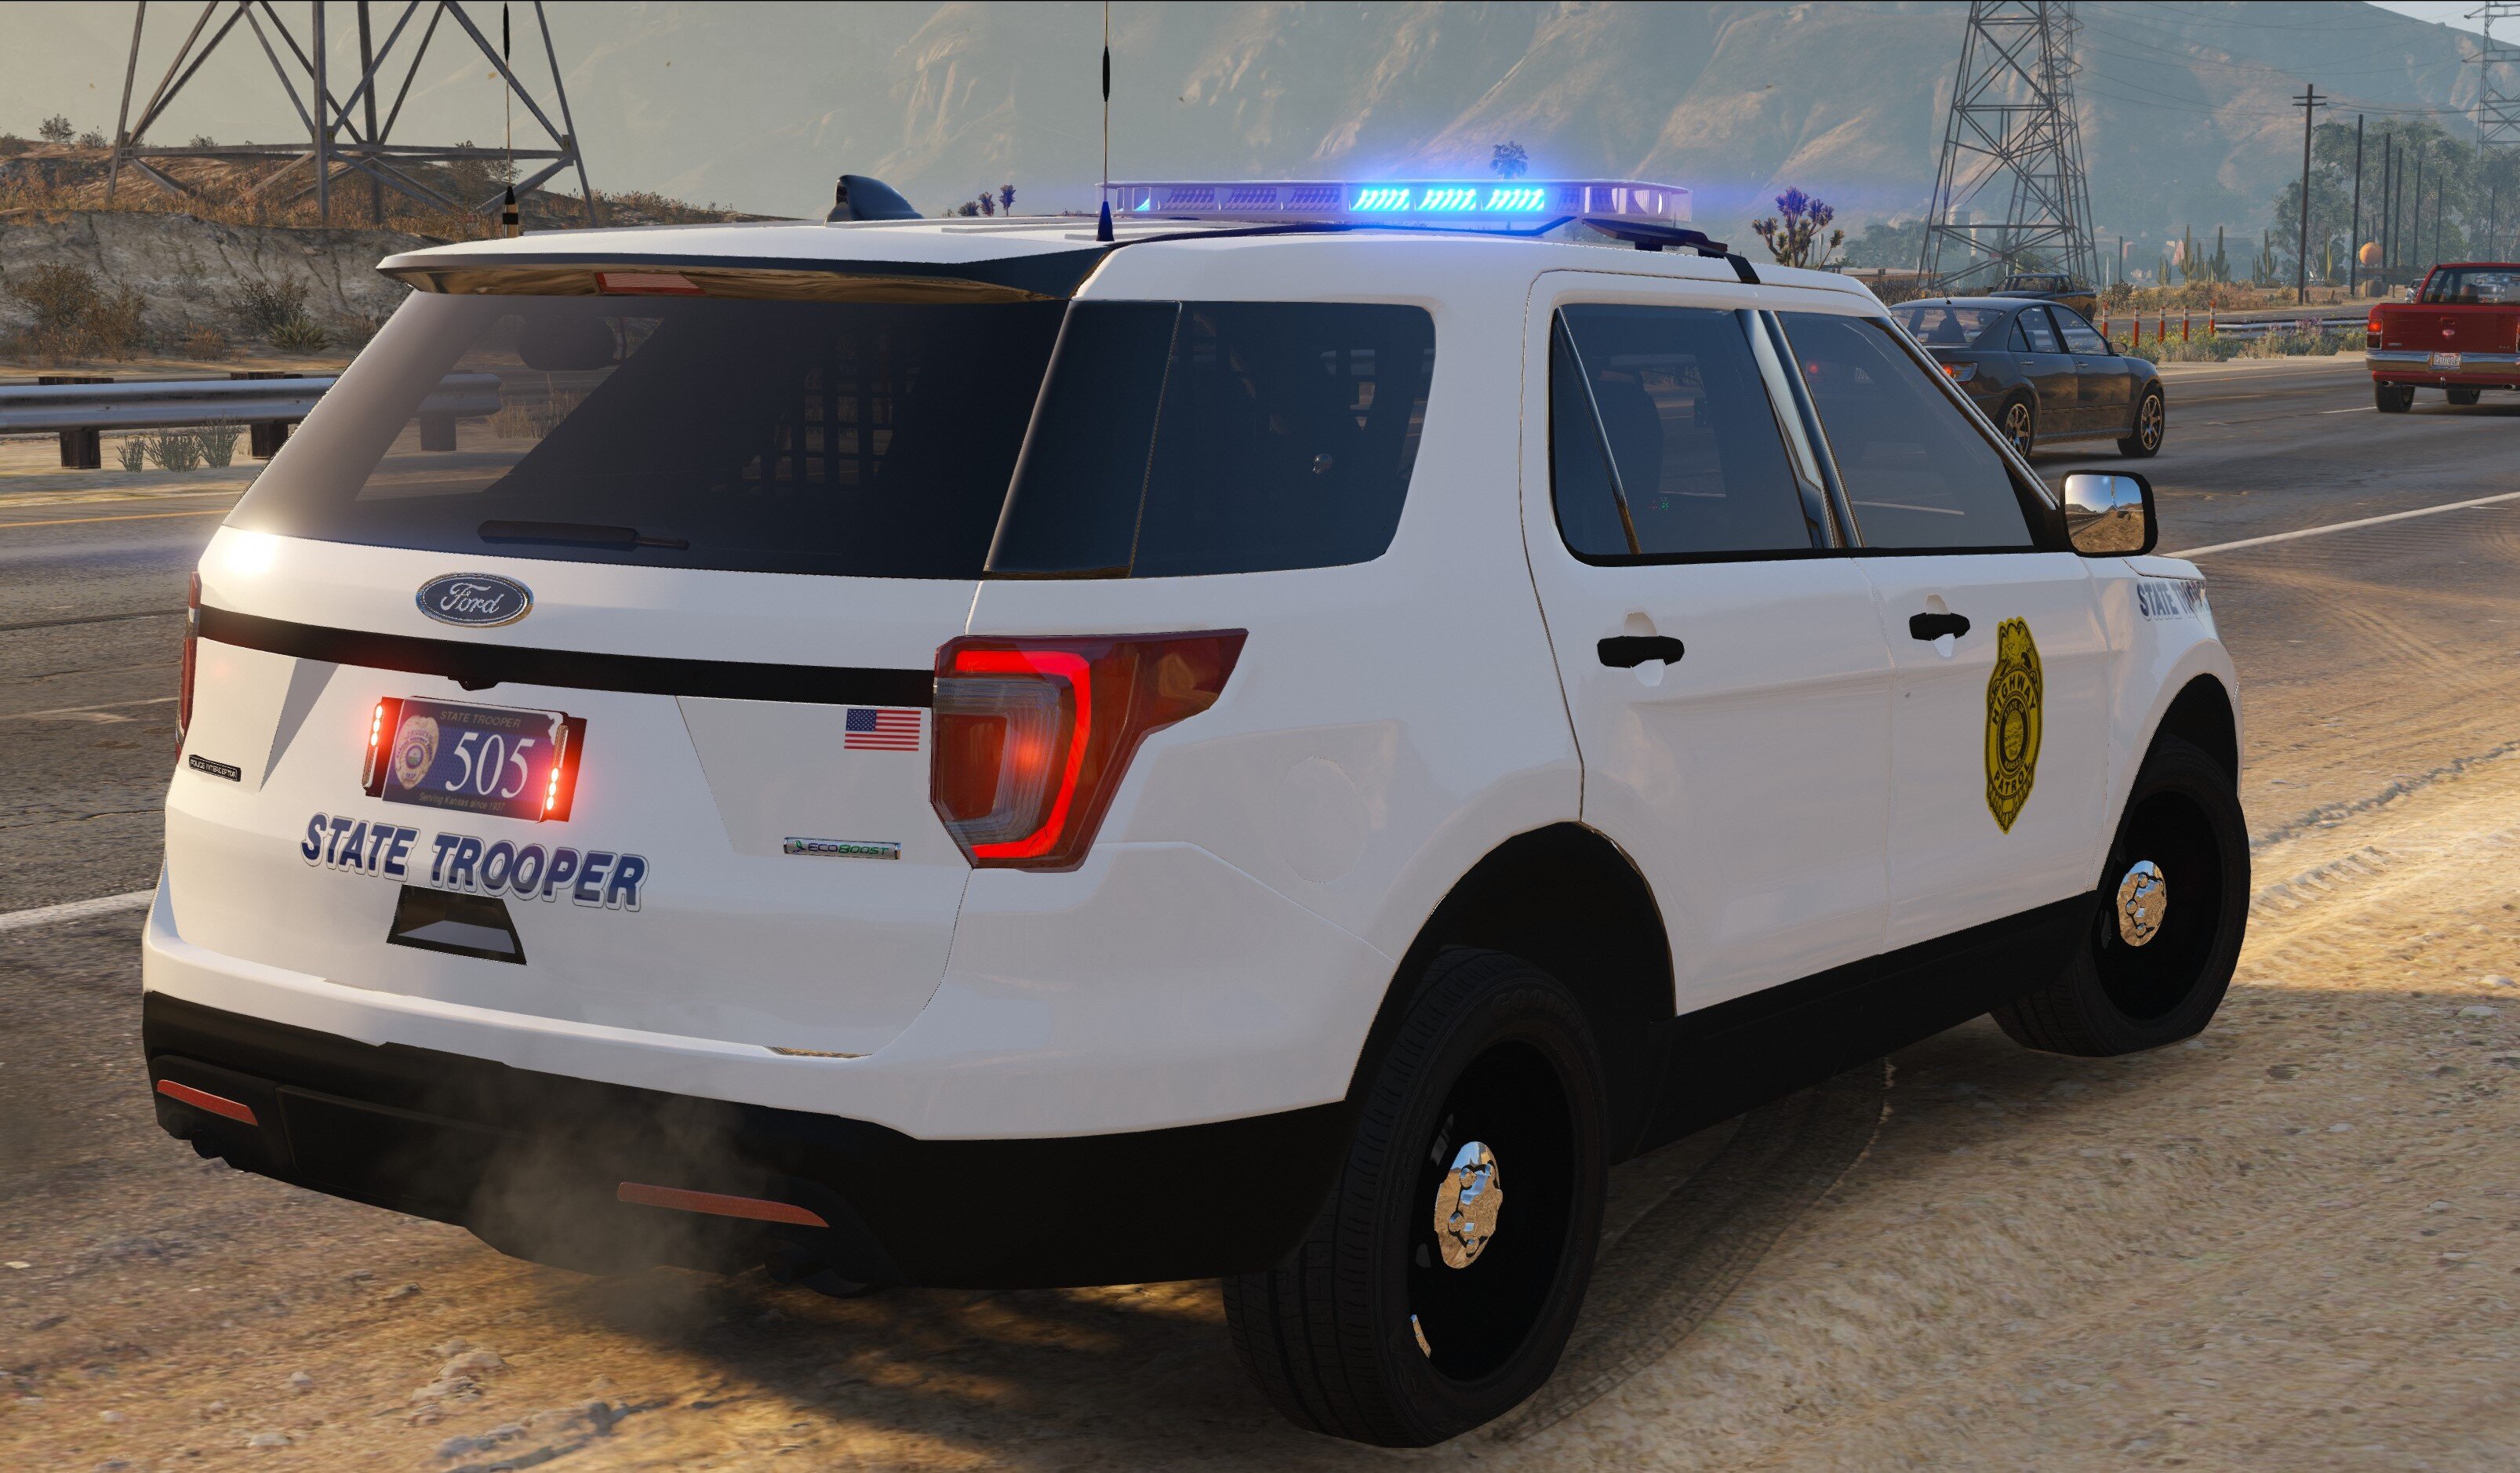 ELS] Kansas Highway Patrol Pack - Vehicle Models - LCPDFR.com